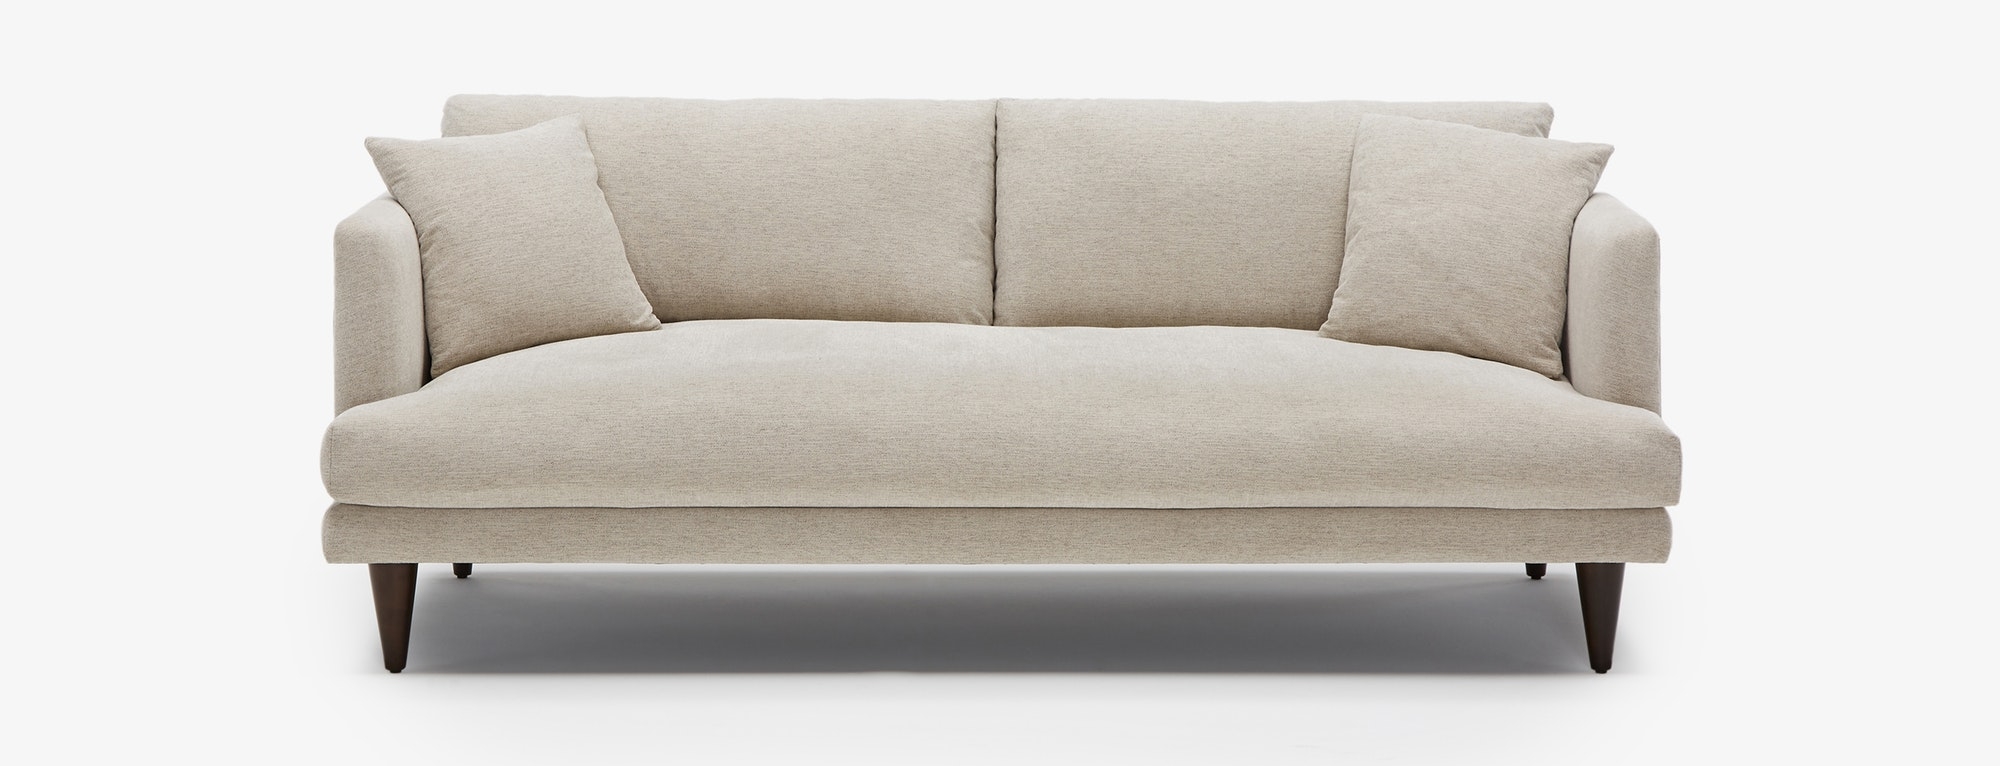 Lewis Mid Century Modern Sofa - Merit Dove - Mocha - Cylinder Legs - Image 0